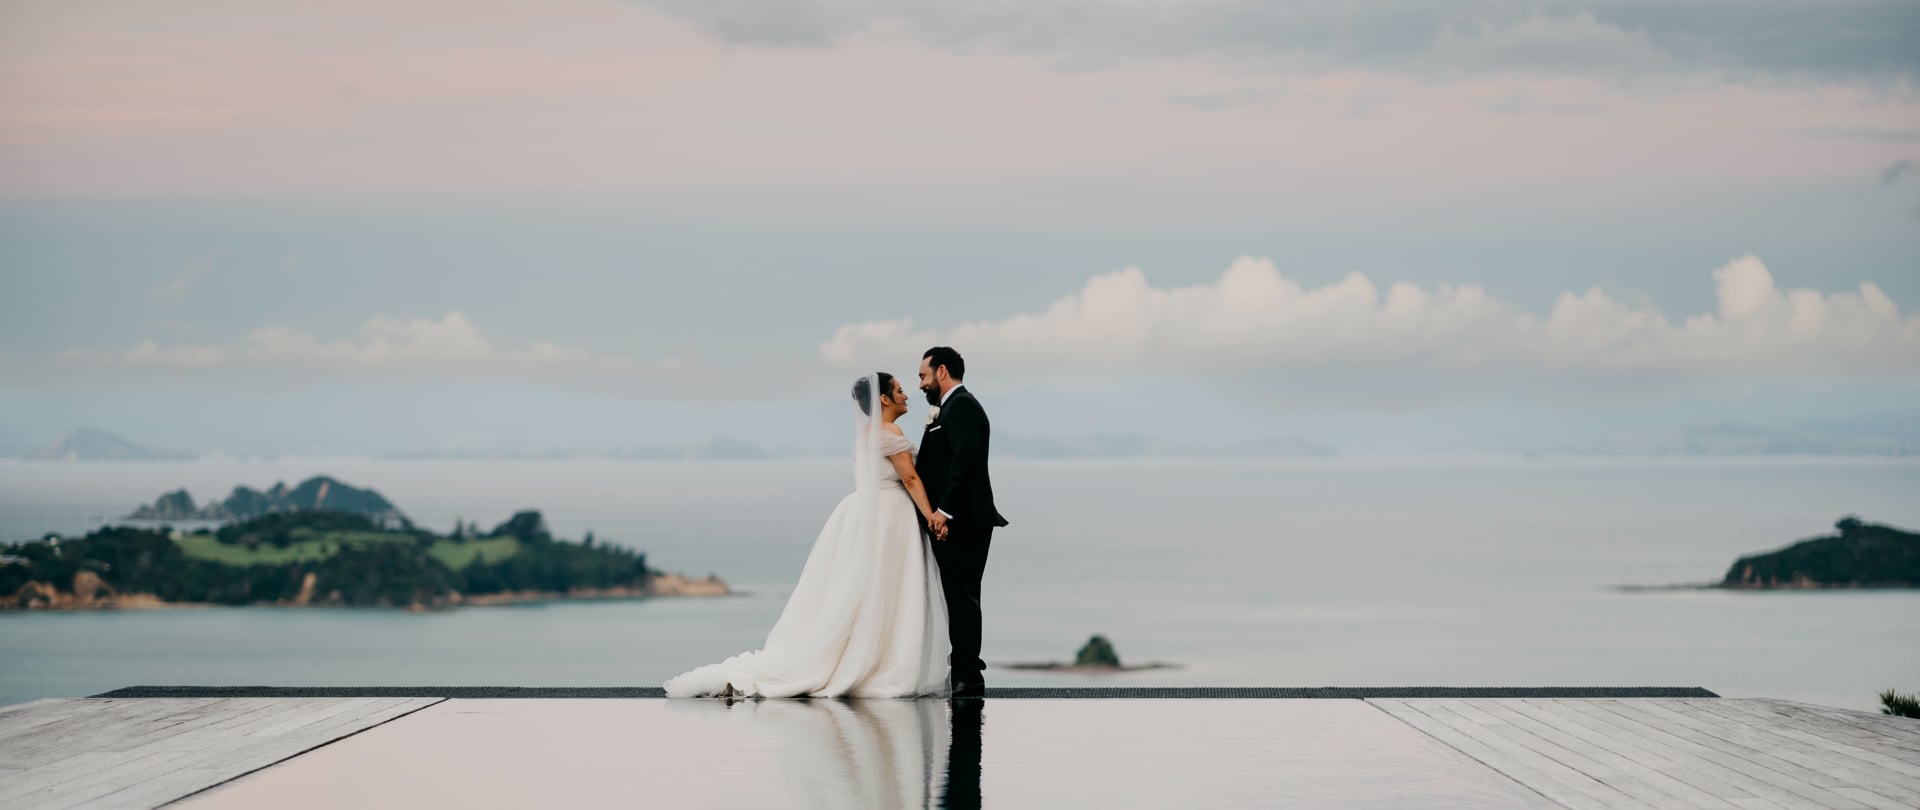 Sophie & Joe Wedding Video Filmed at Waiheke Island, New Zealand